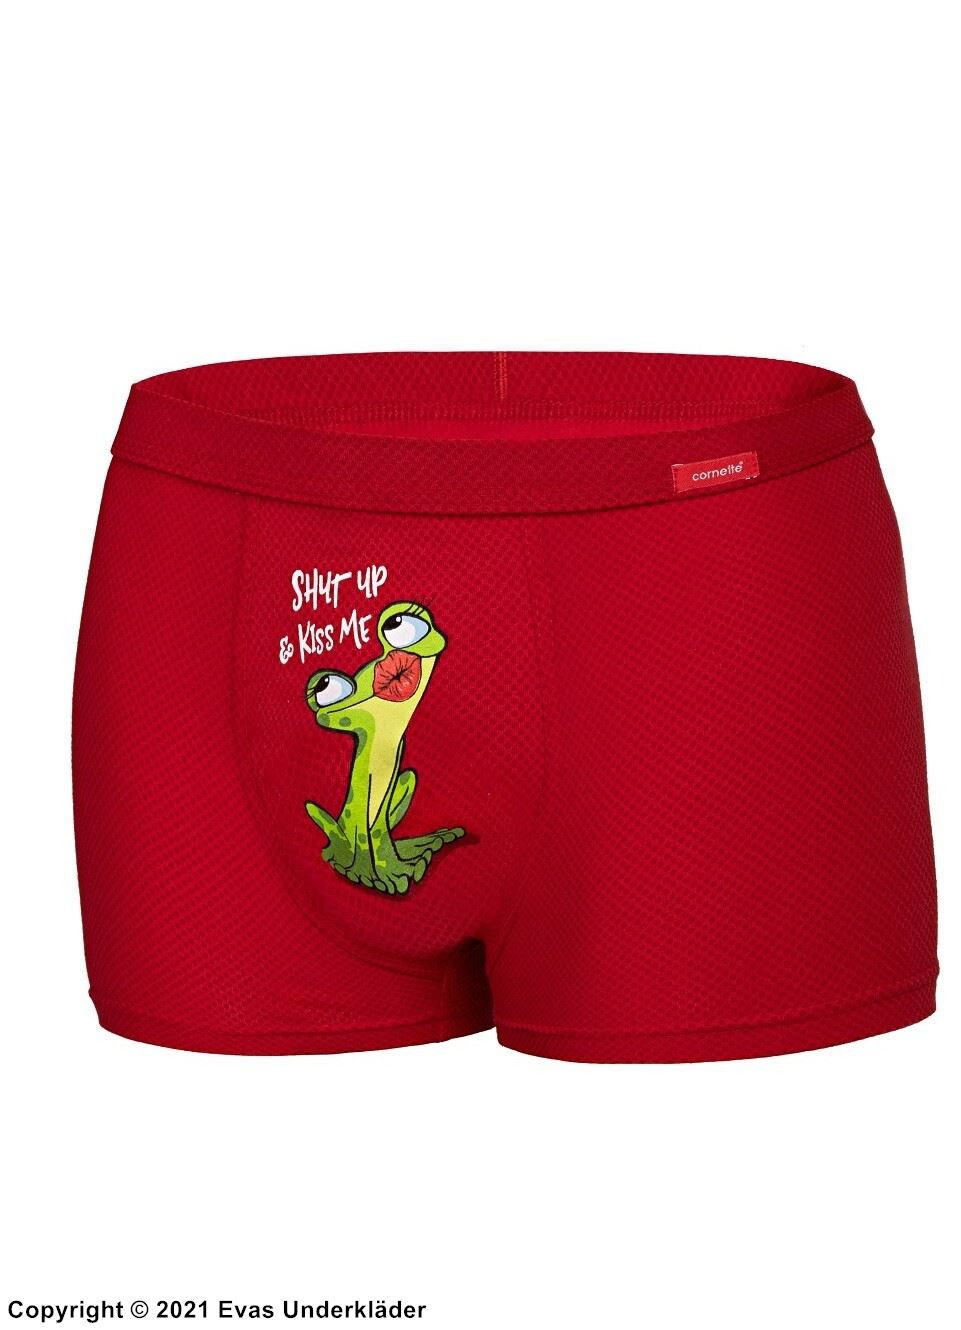 Men's boxer shorts, high quality cotton, frog